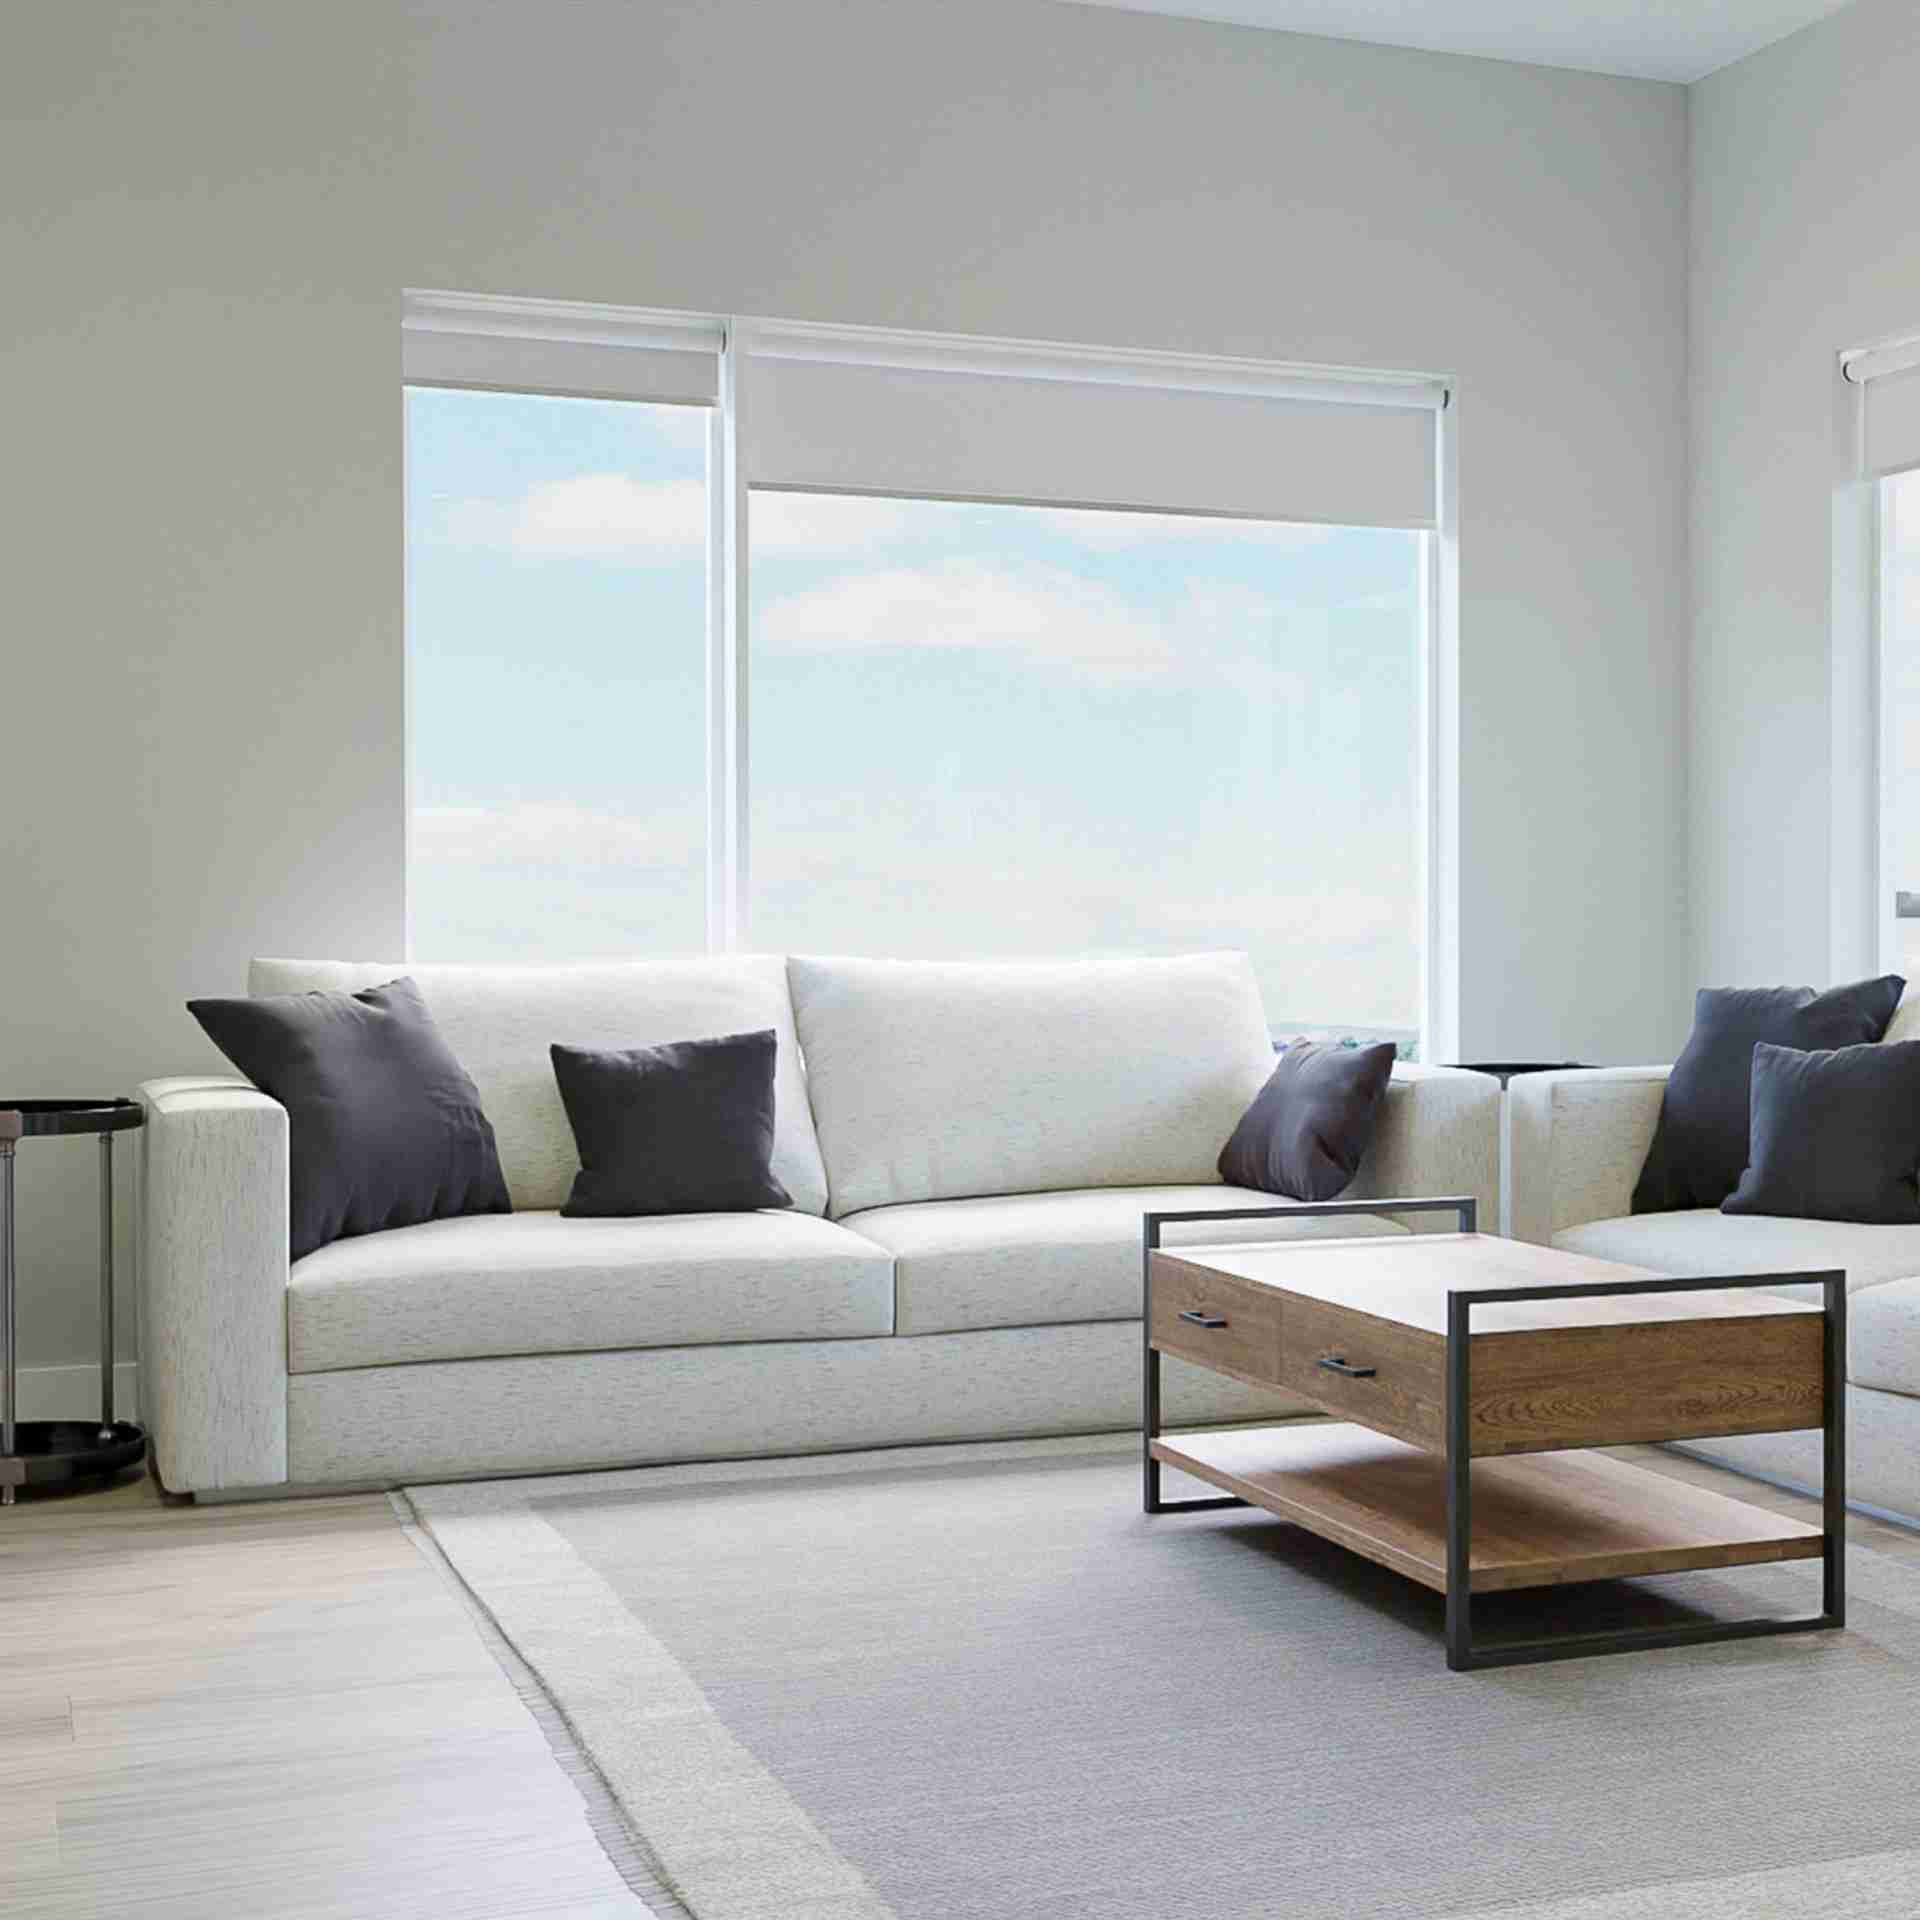 Gallery - rendering-interior-living-room